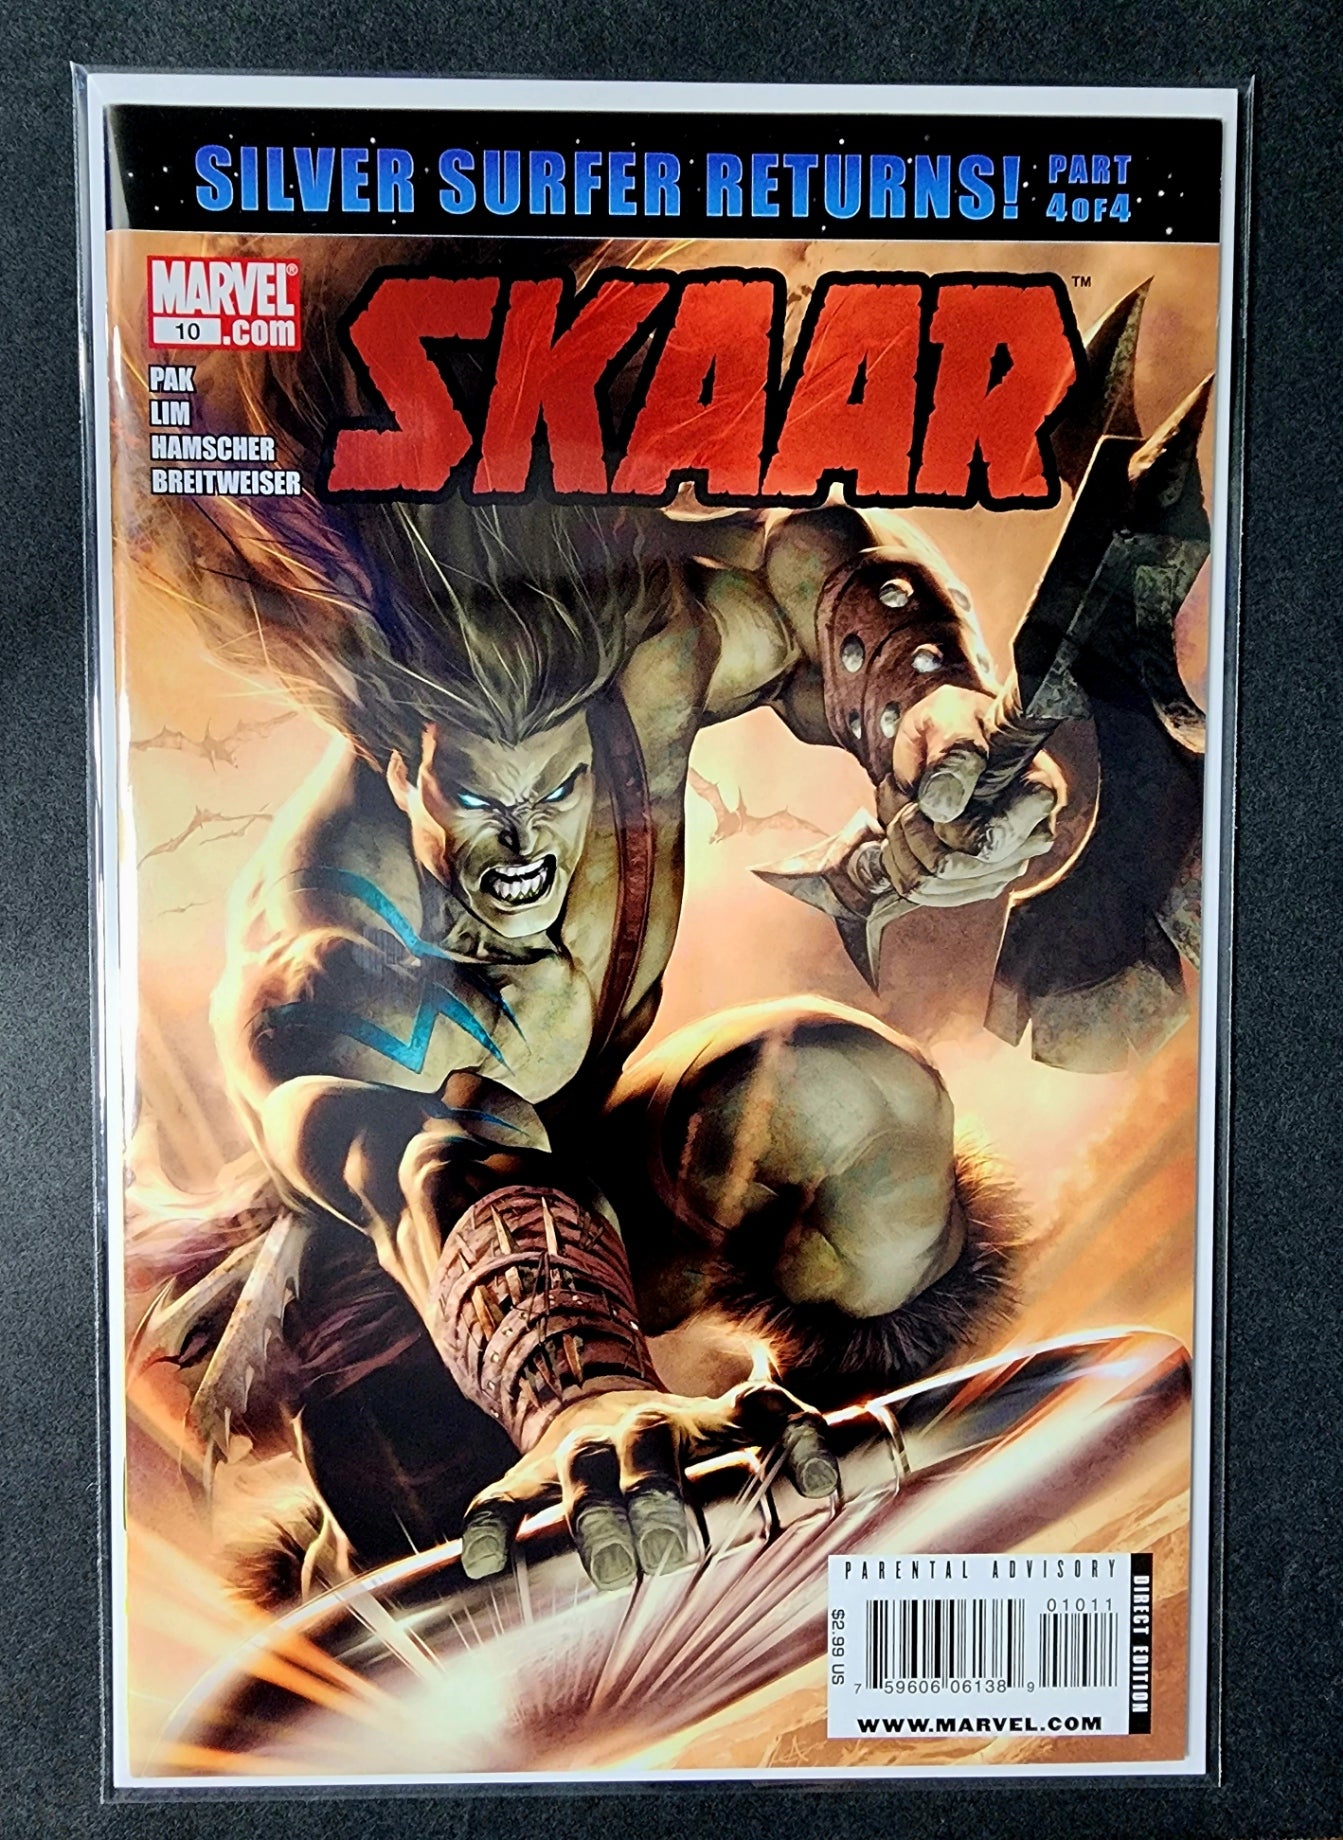 Skaar: Son of Hulk #19 (VF/NM)